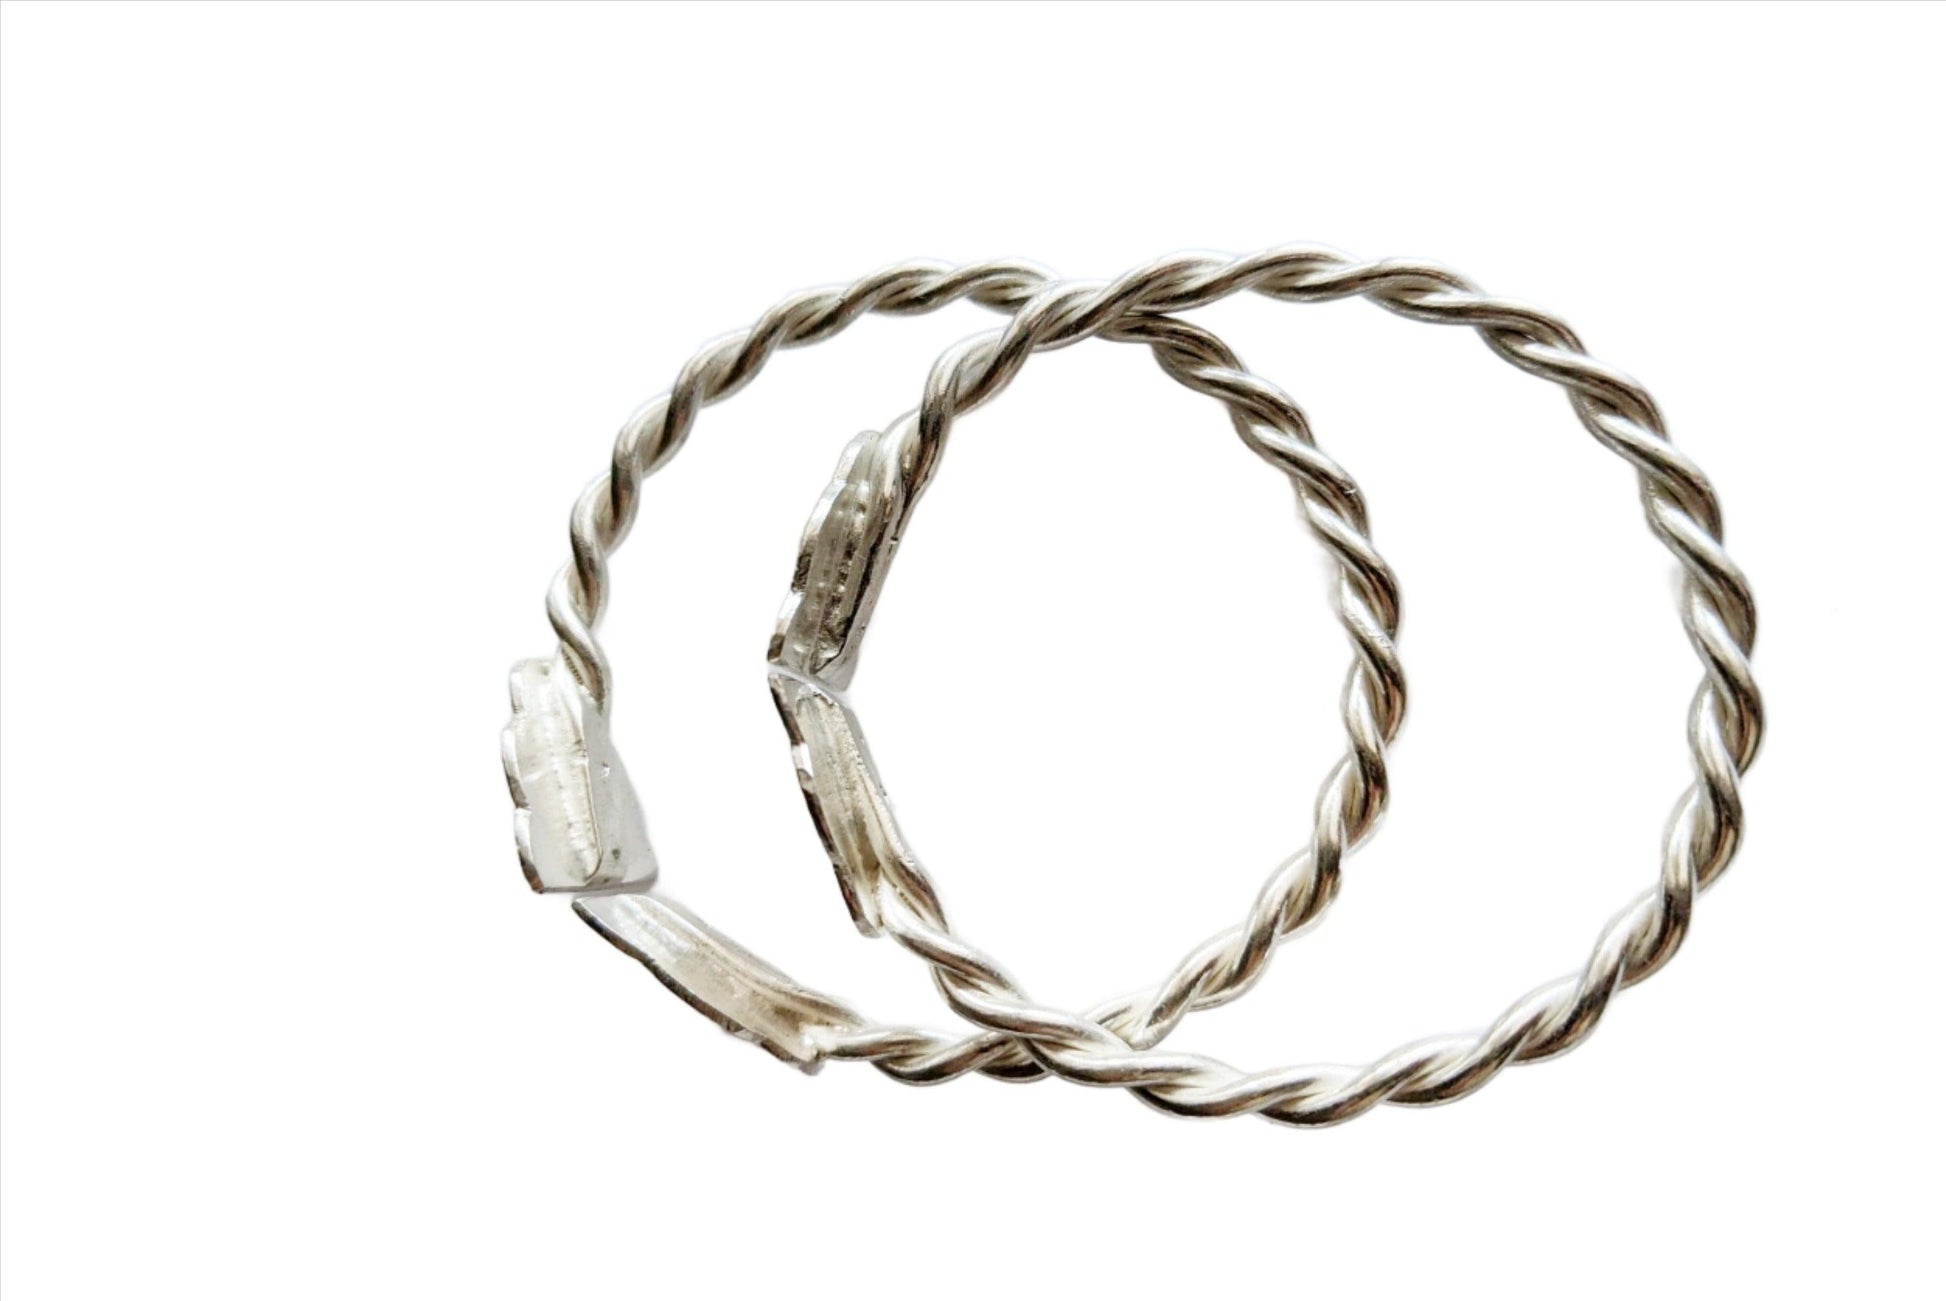 Matching Pair of Silver Palestinian Bracelets - Anteeka